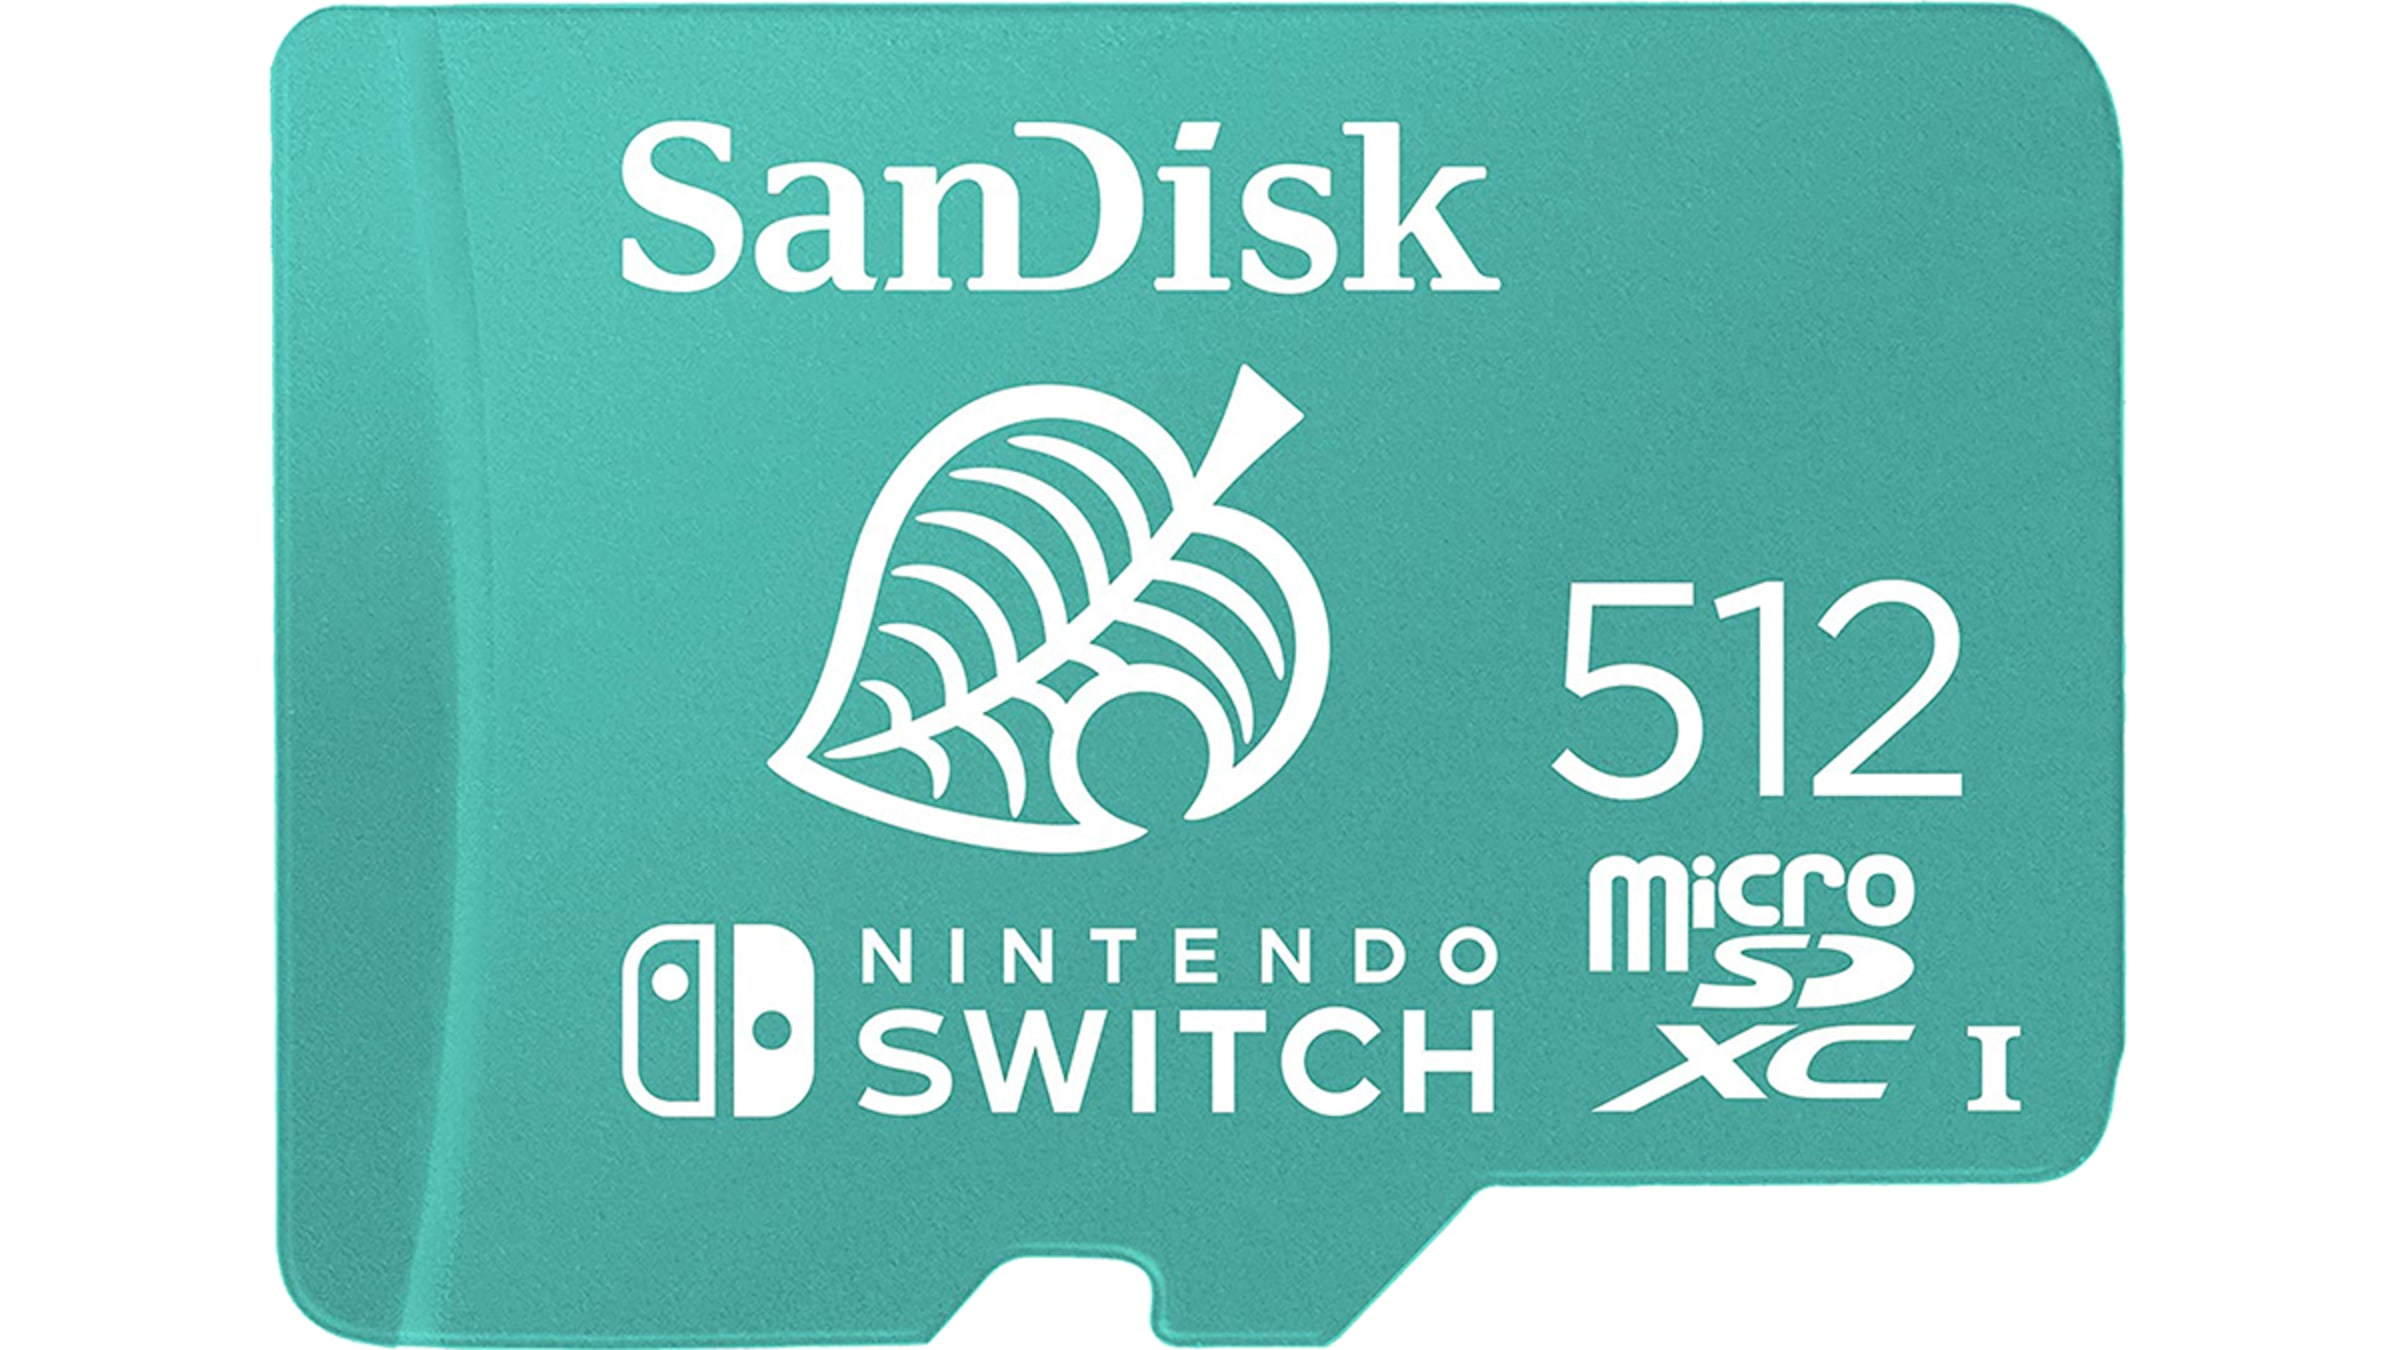 Nintendo Switch + 512GB micro SD